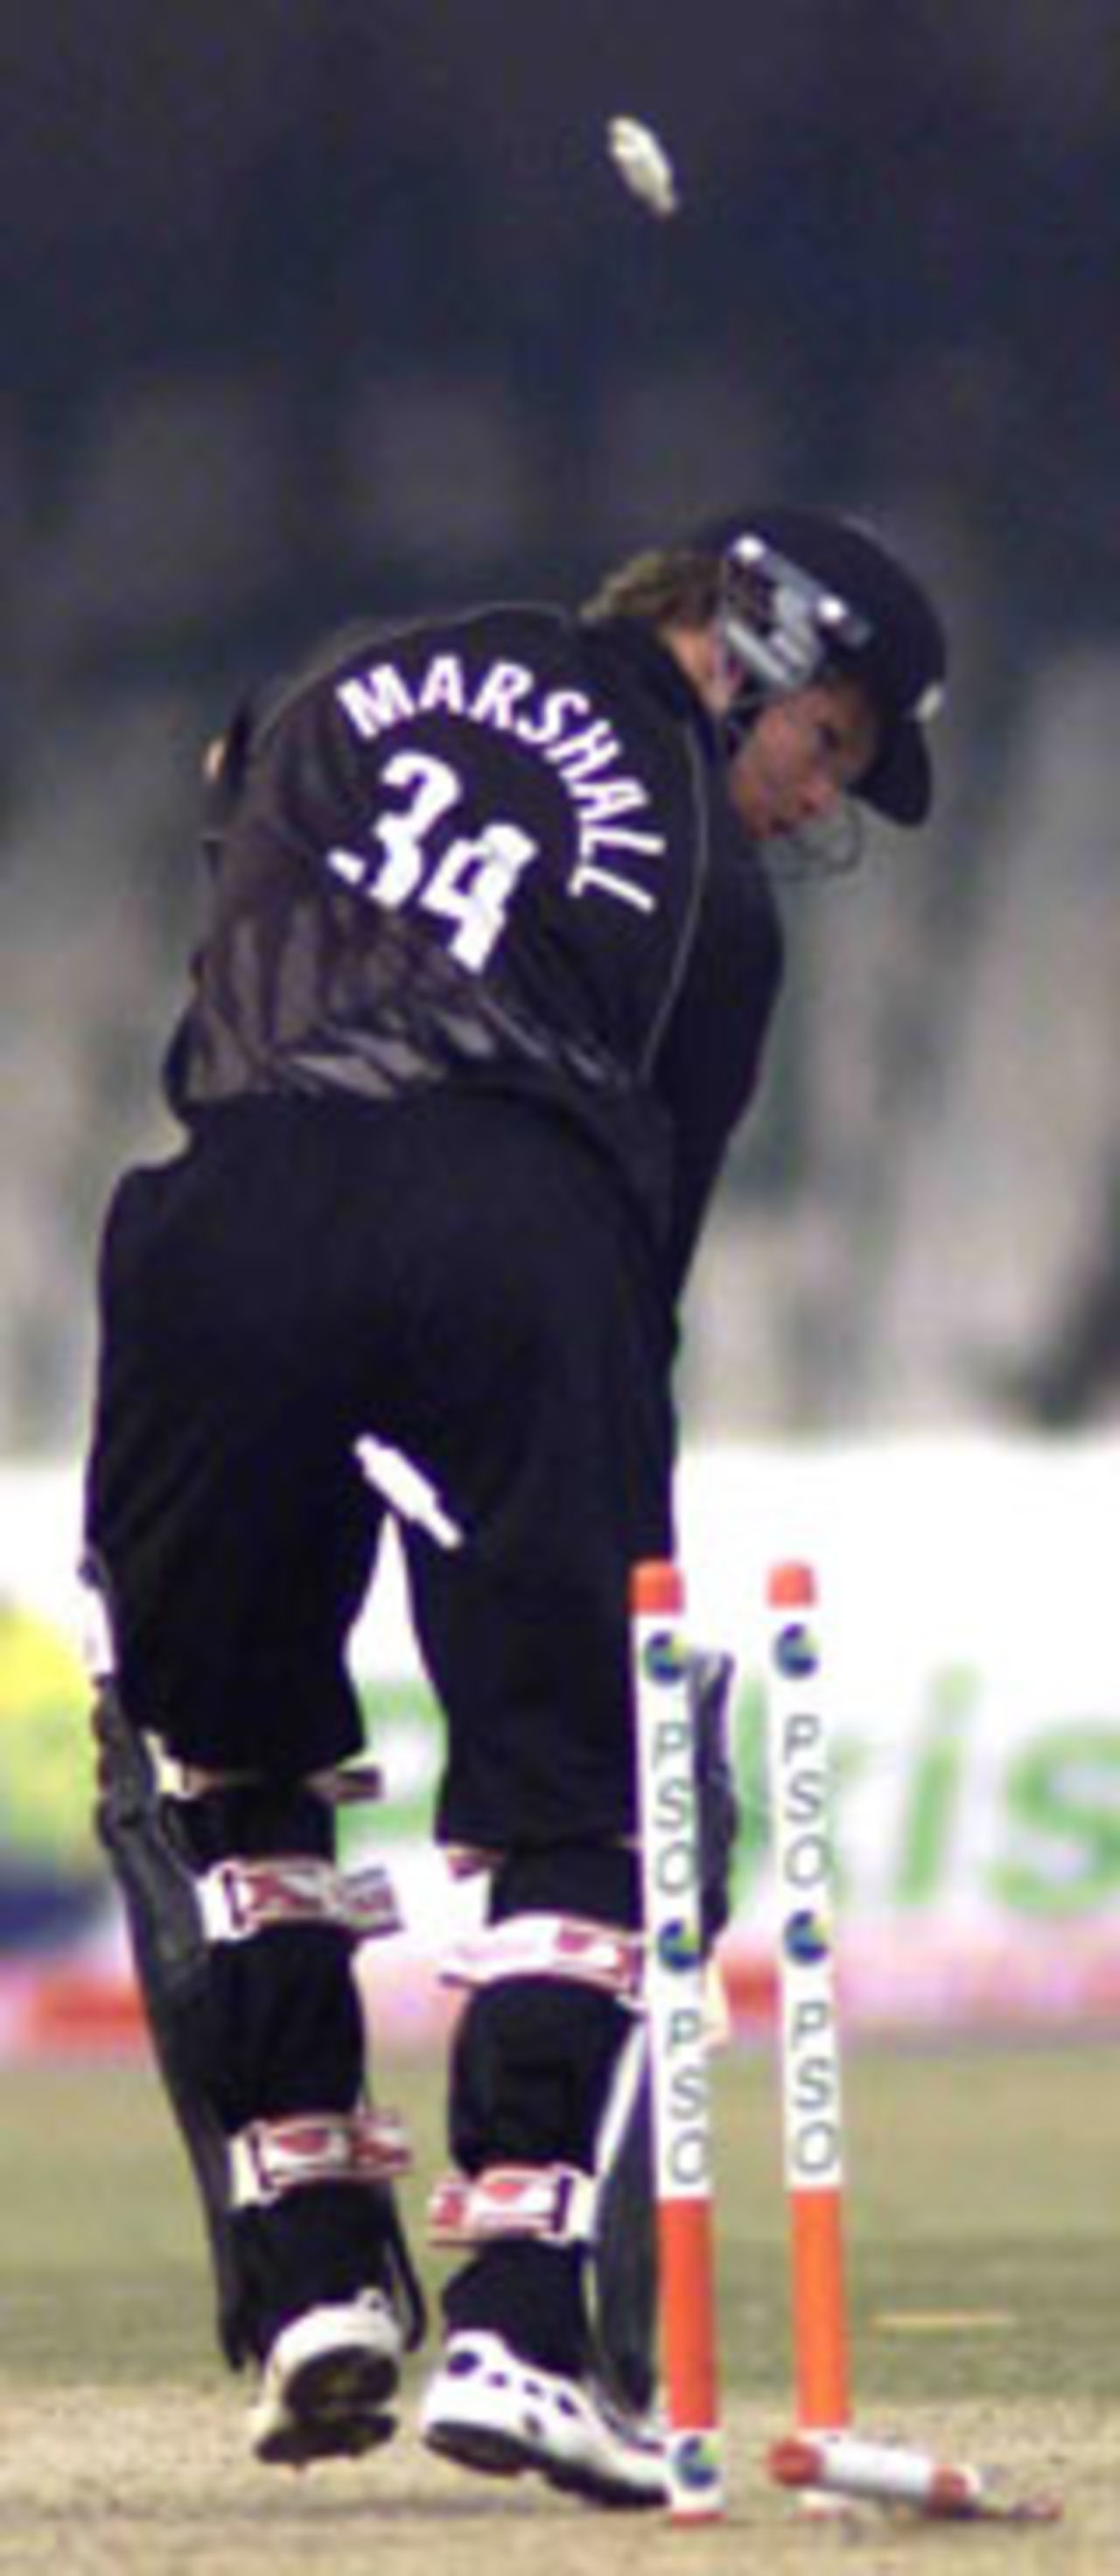 Hamish Marshall looks back as Abdul Razzal makes his legstump and bails fly, Pakistan v New Zealand, 2nd ODI, Lahore, December 1, 2003.